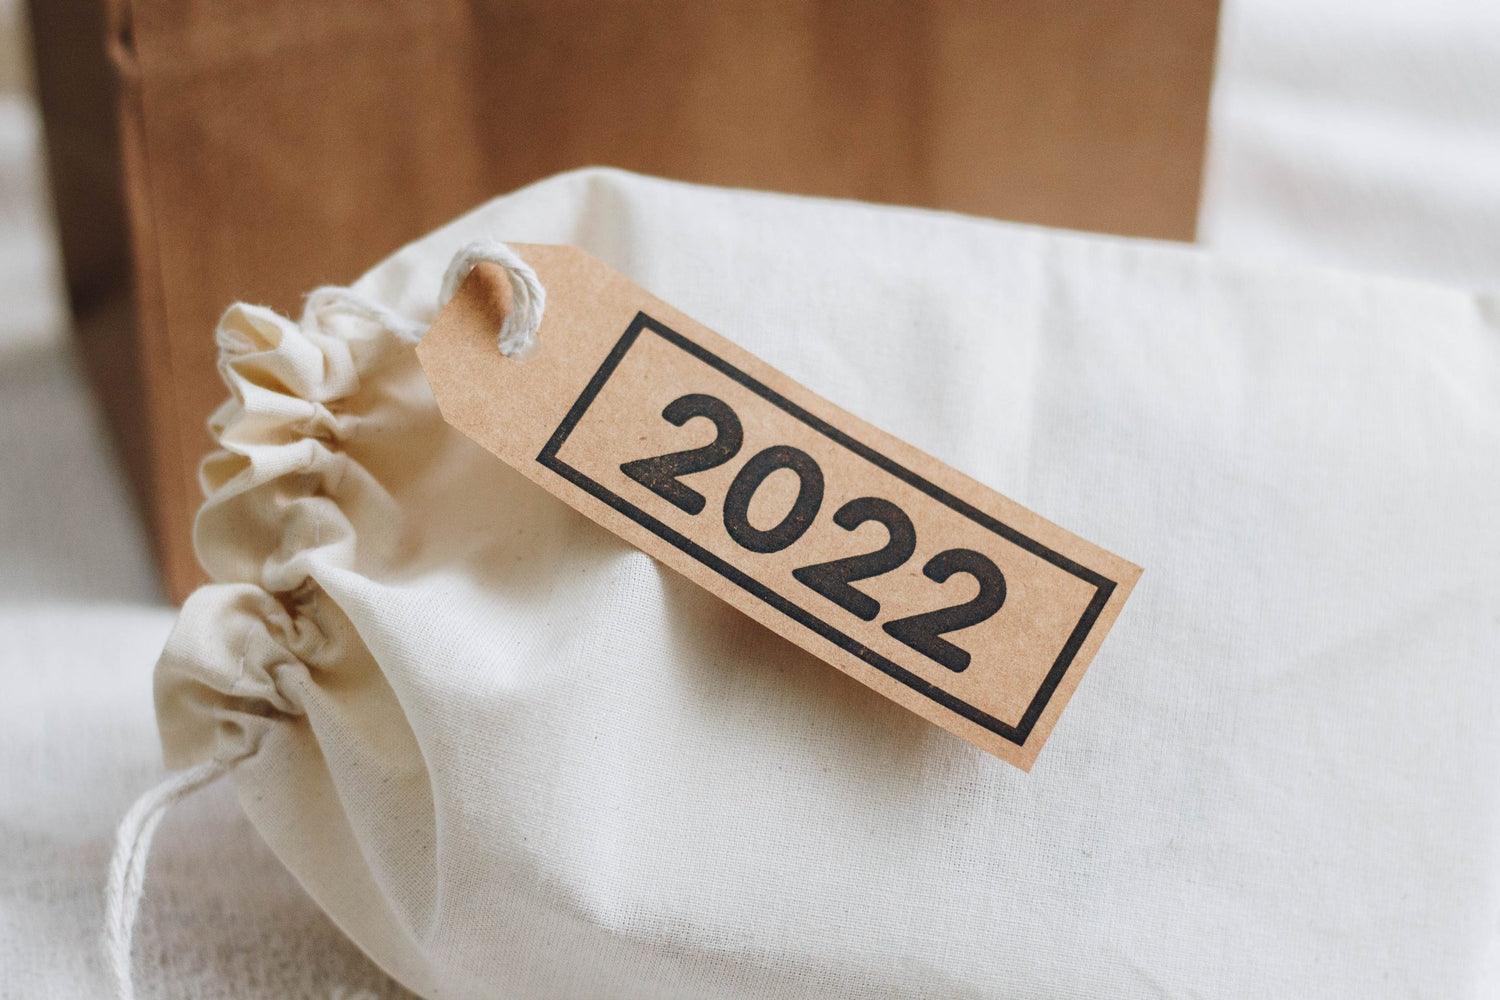 Sneak Peek at 2022: Resource, Equip, Inspire